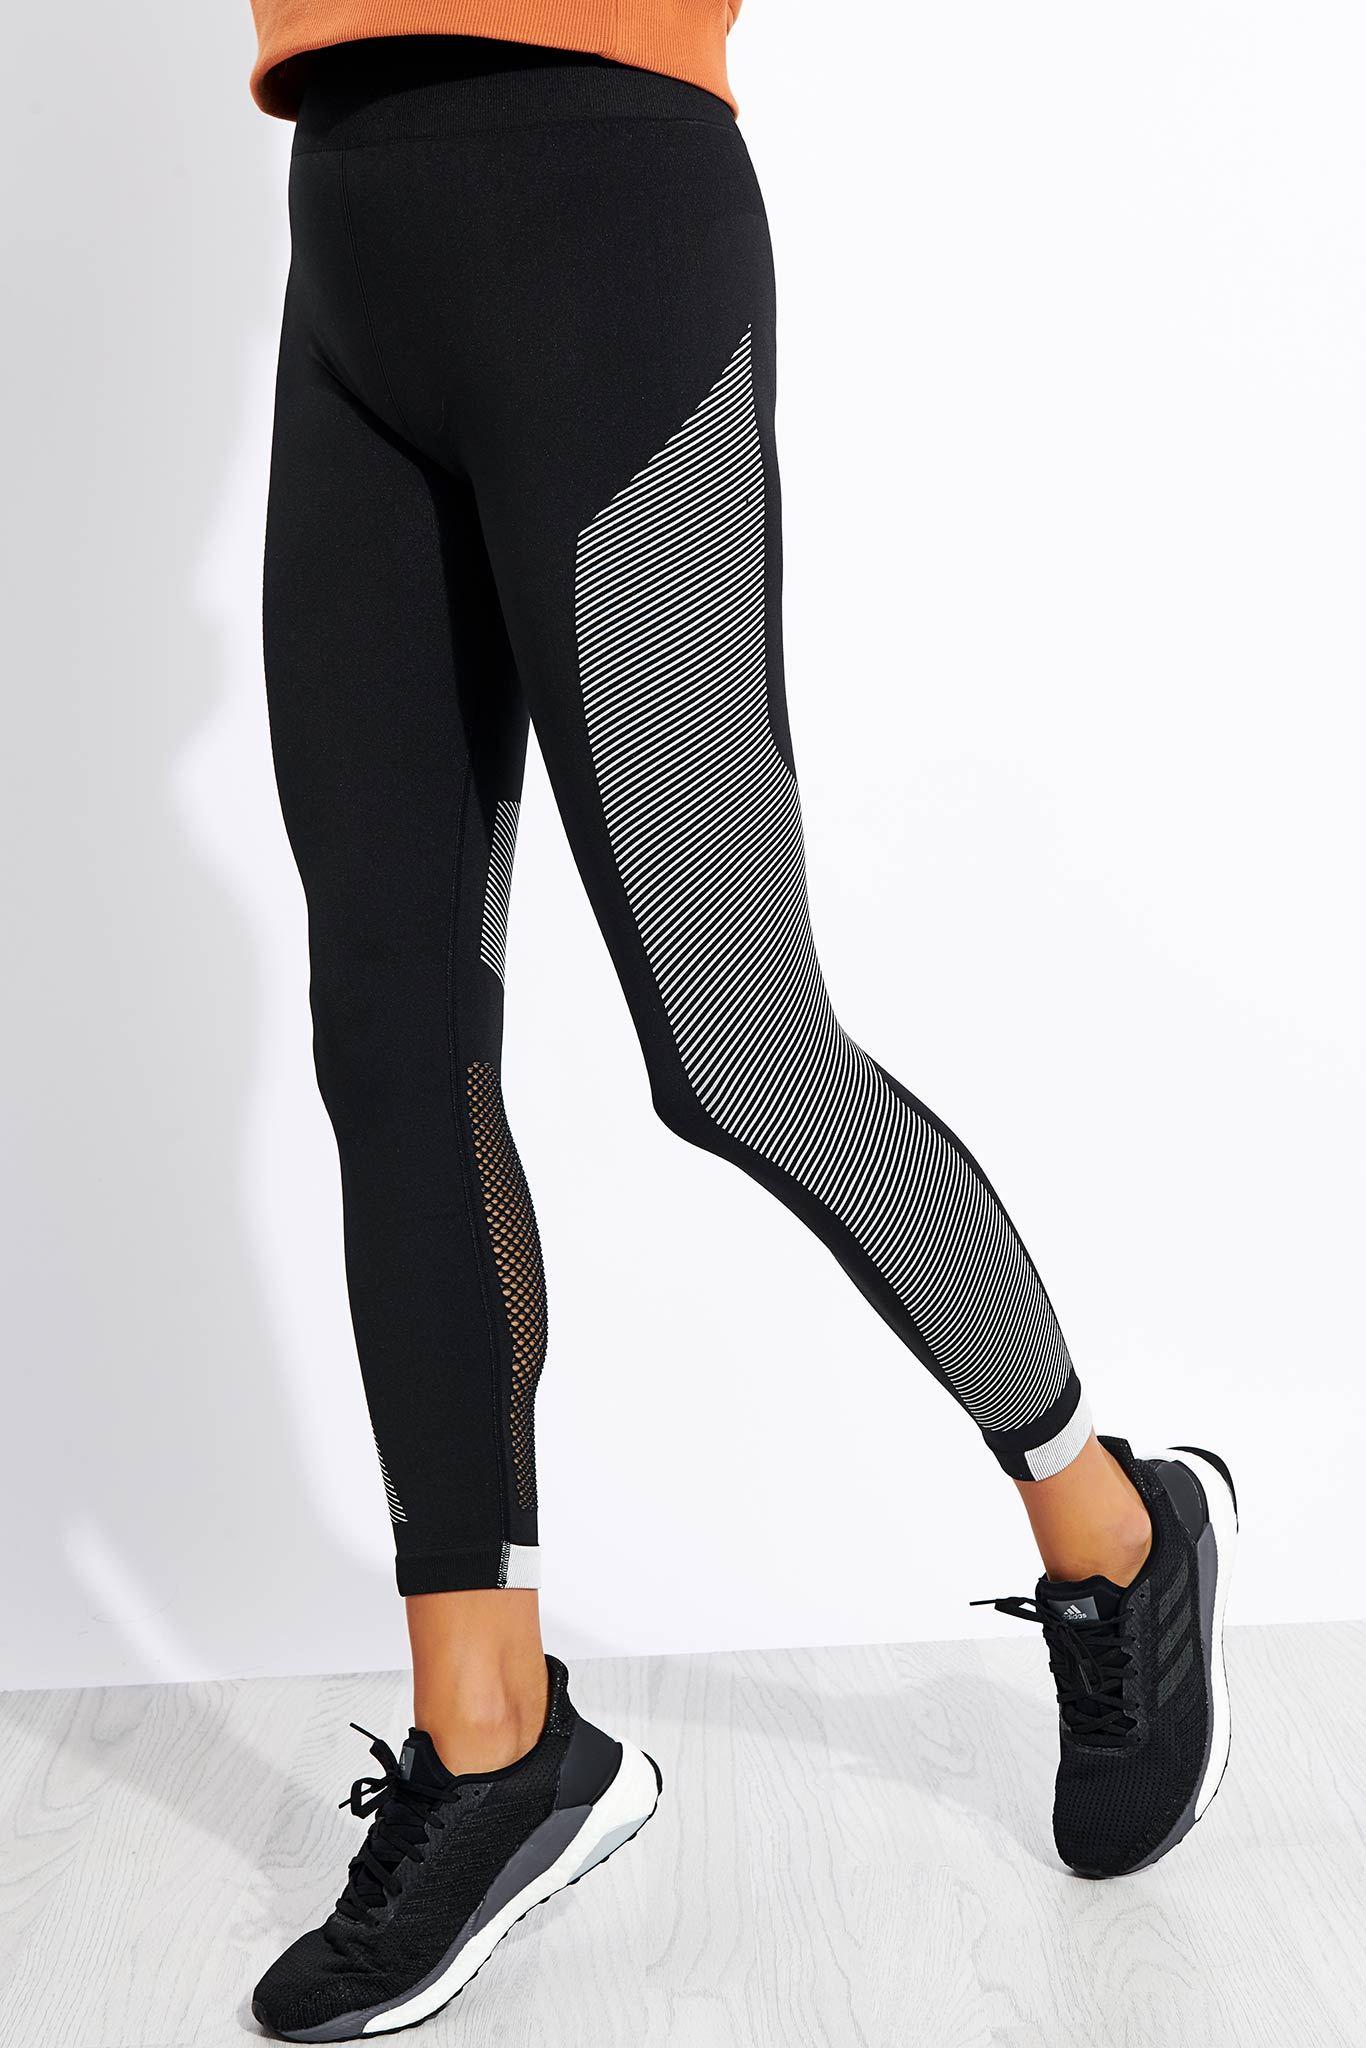 adidas believe this primeknit flw leggings